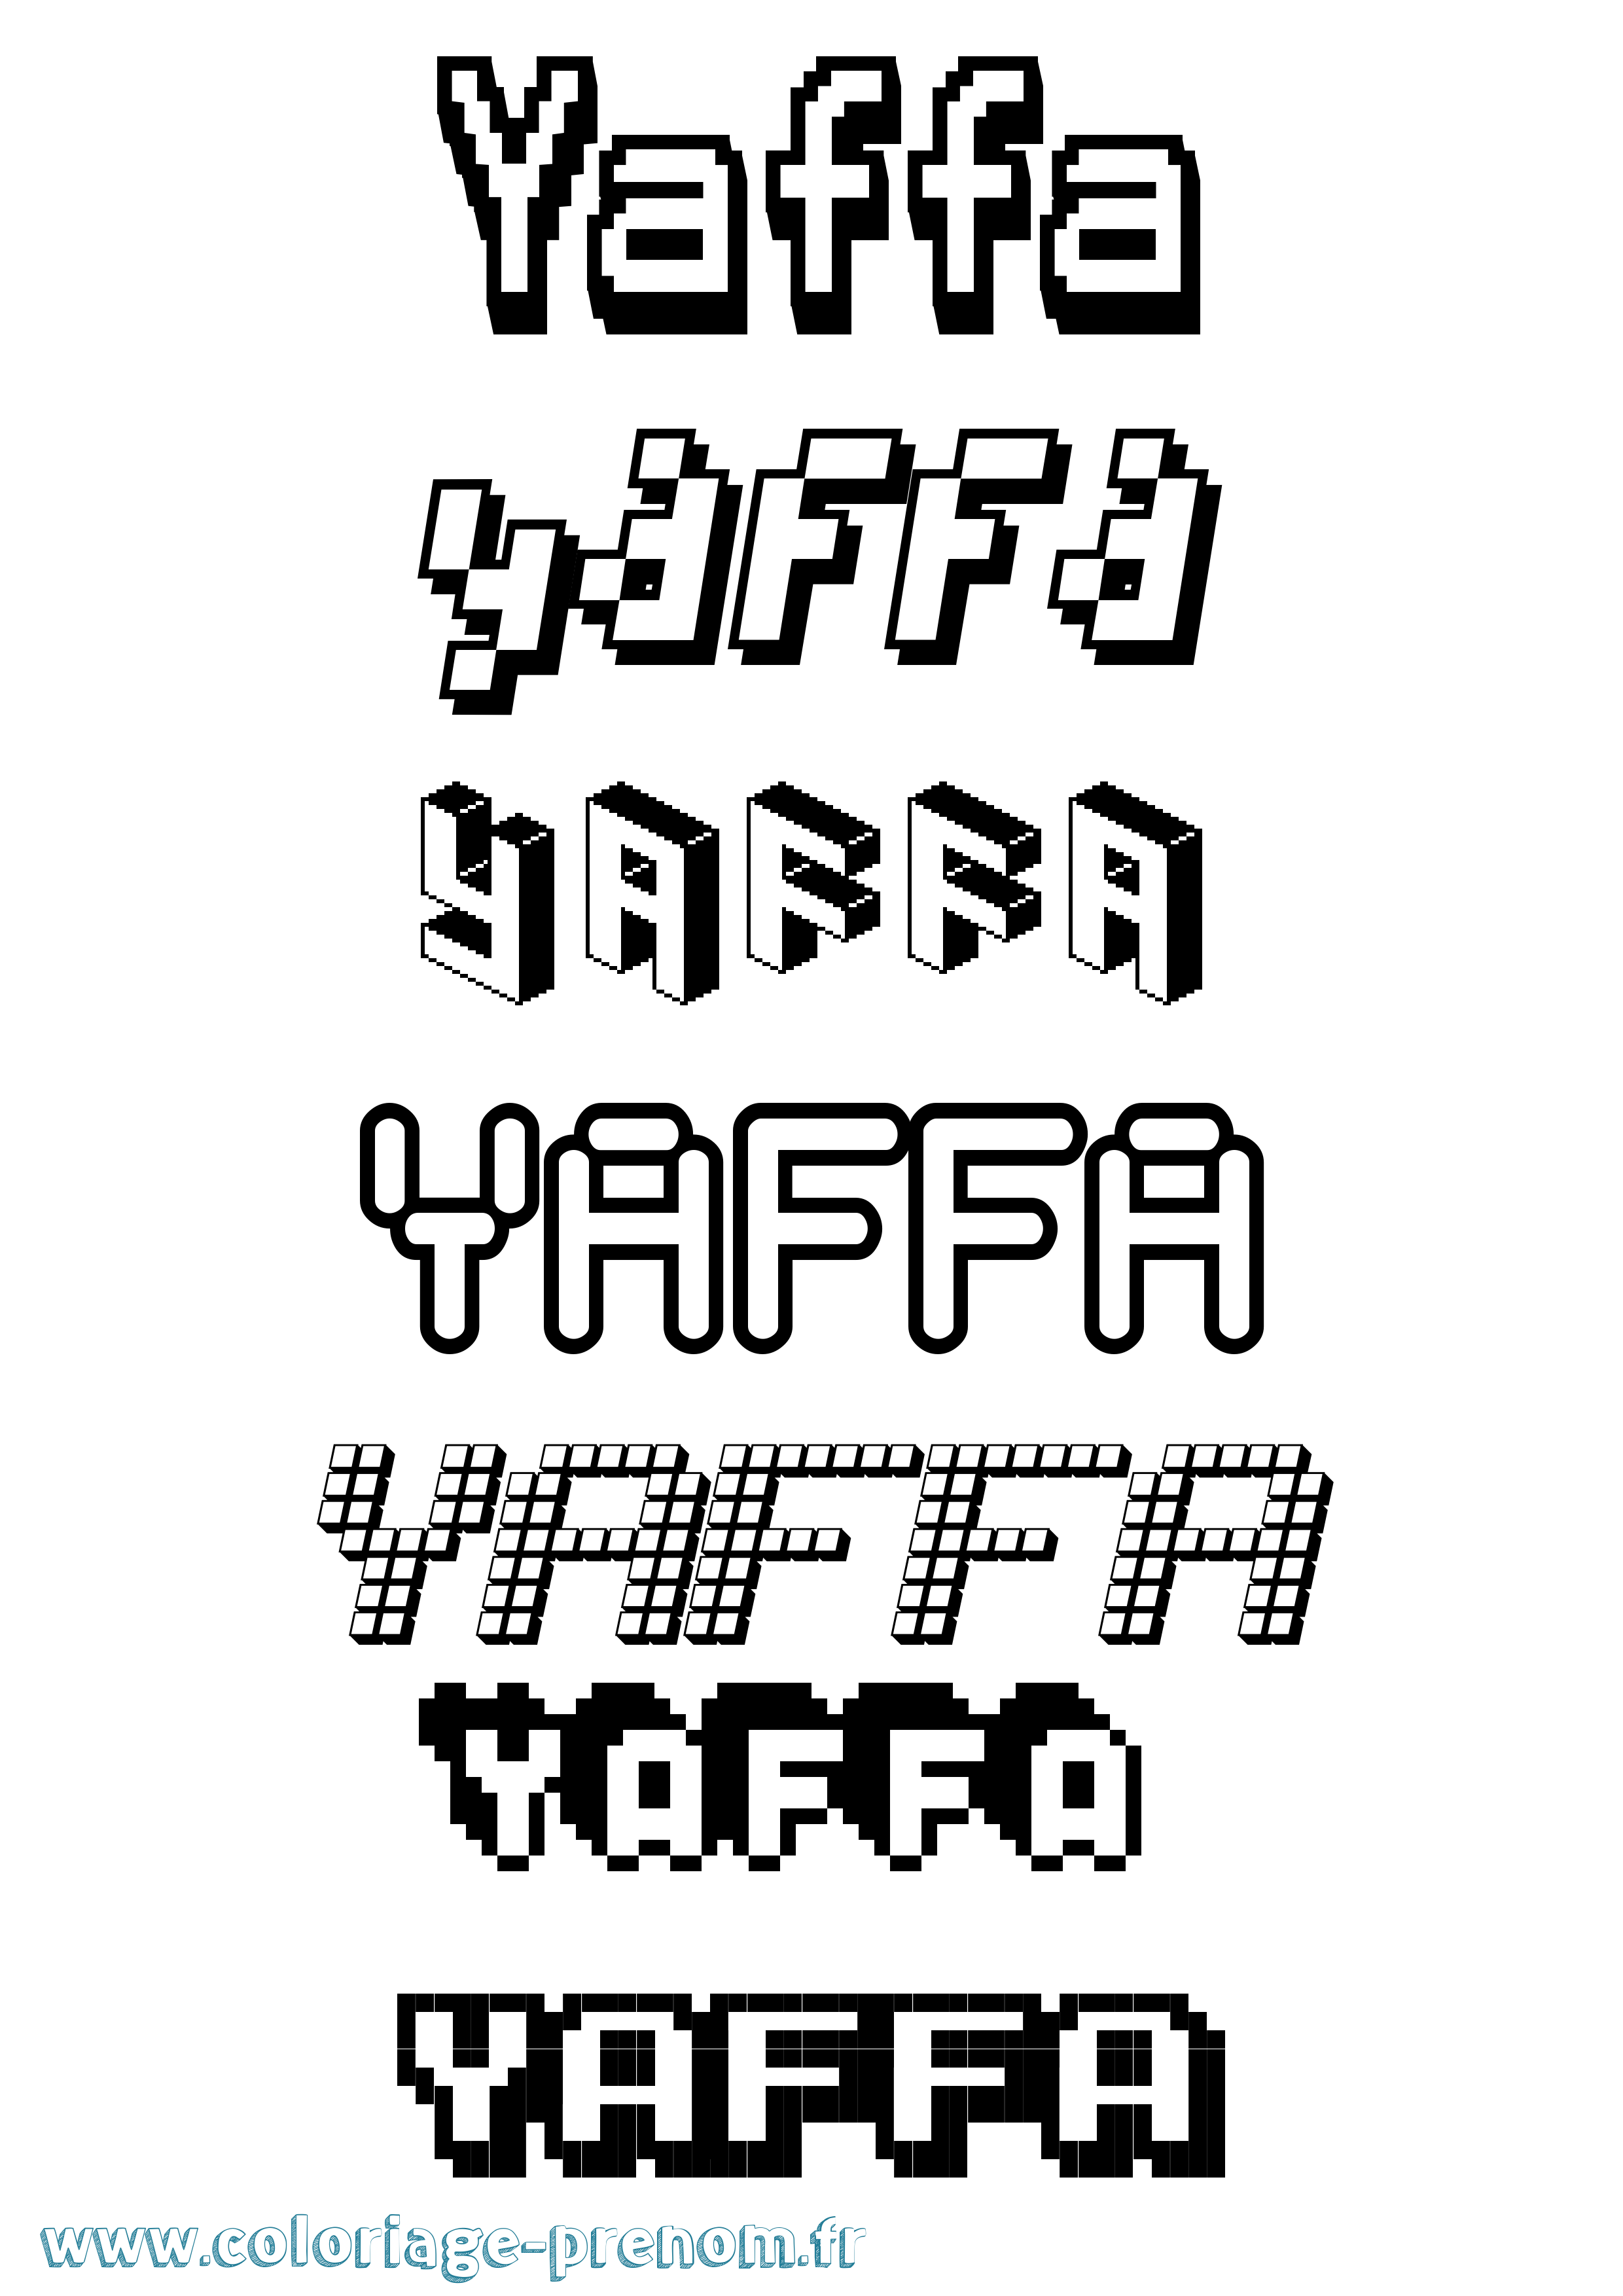 Coloriage prénom Yaffa Pixel